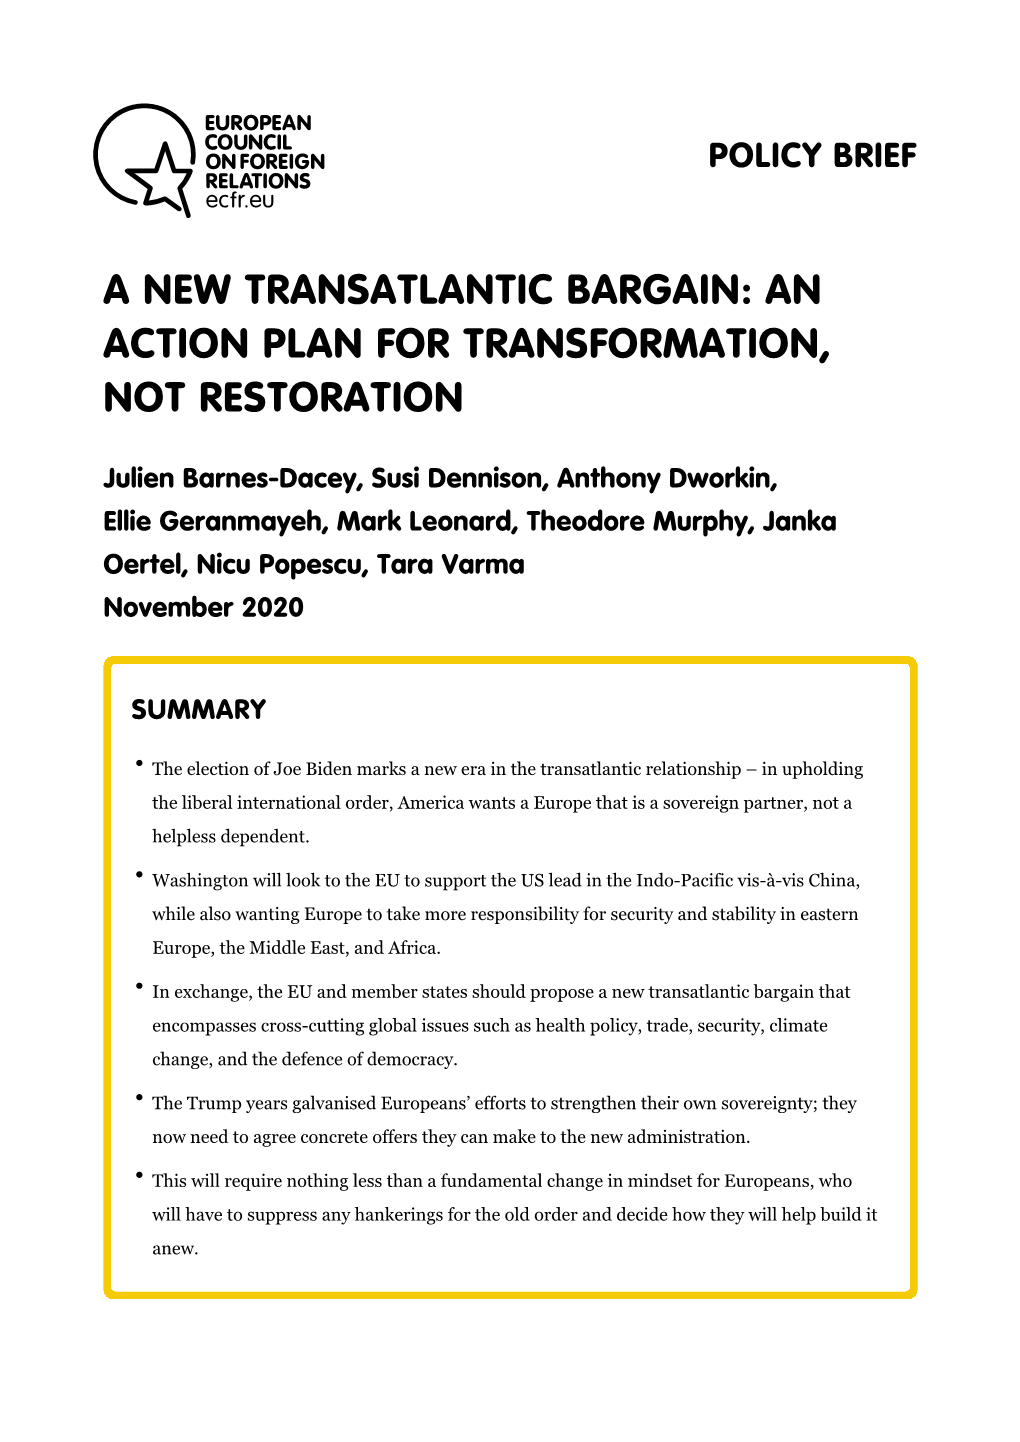 A New Transatlantic Bargain: an Action Plan for Transformation, Not Restoration